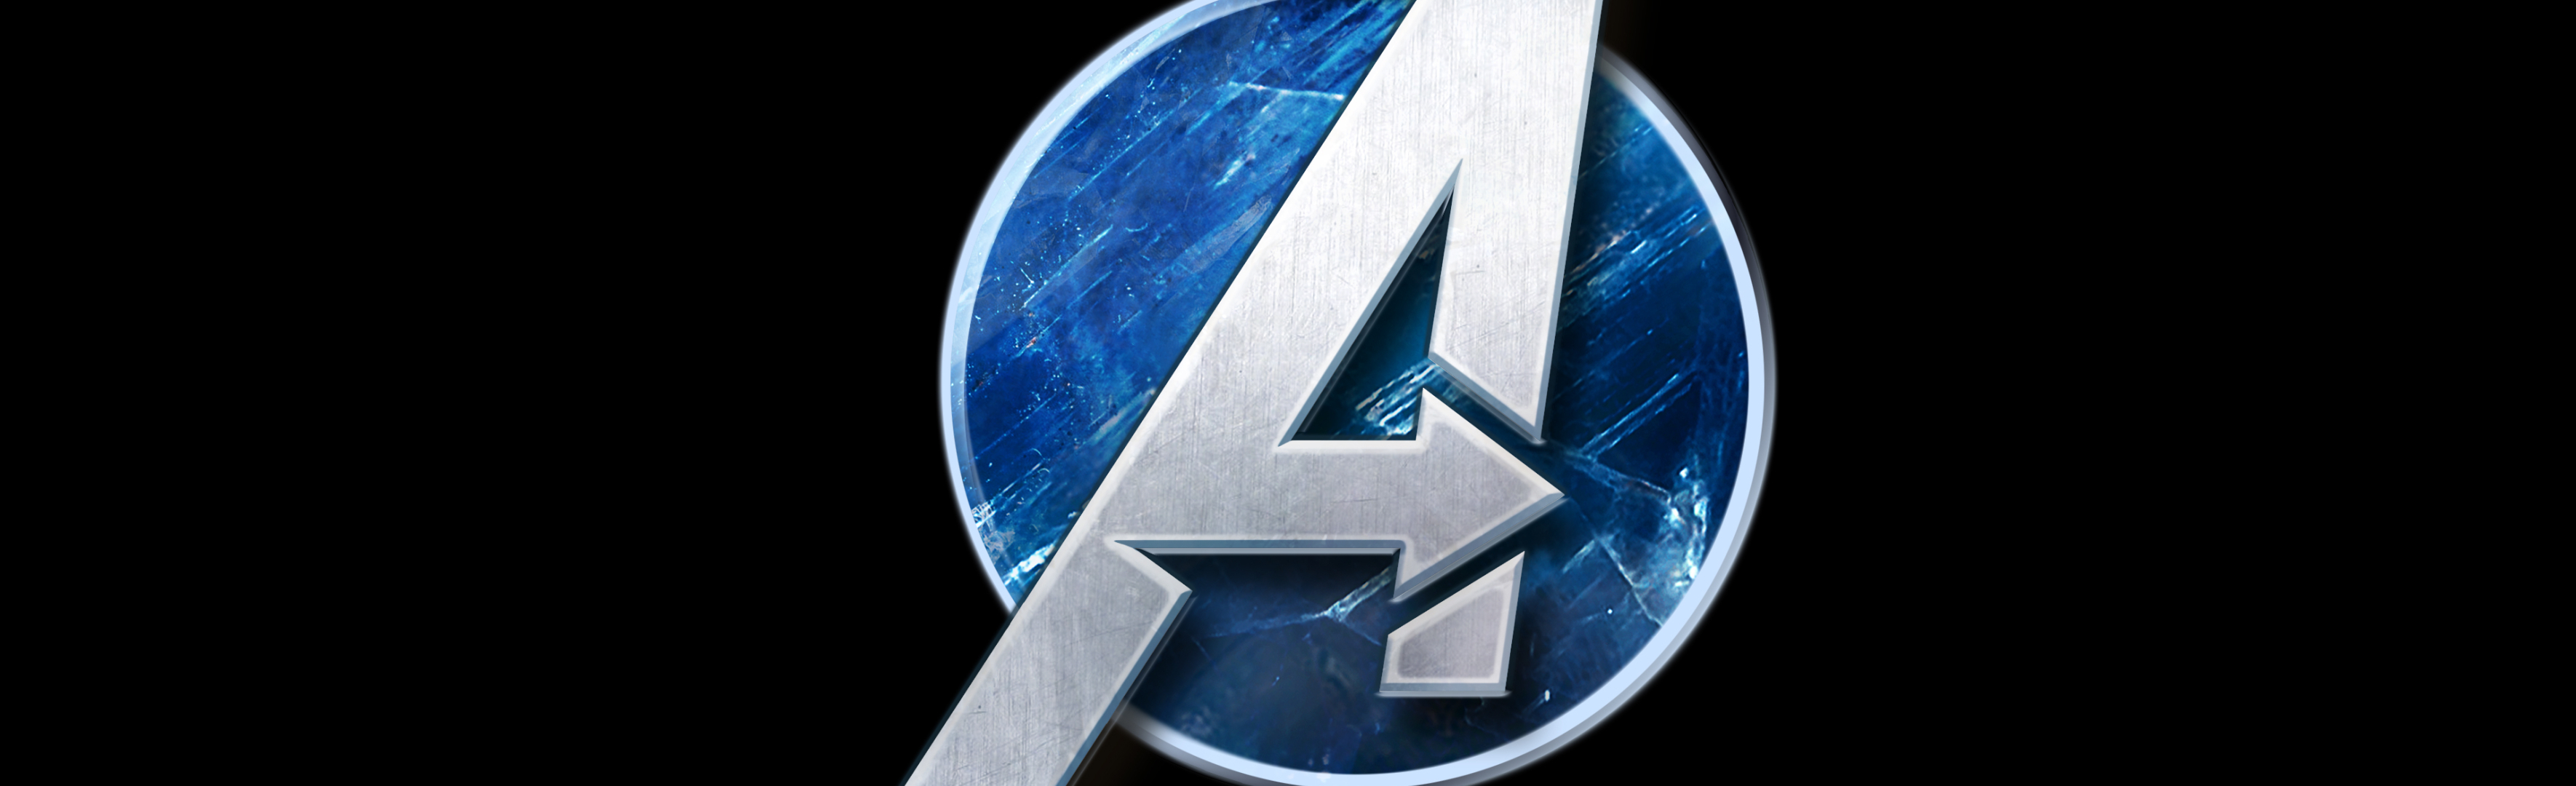 3540x1080 Resolution Marvels Avengers Game Logo 3540x1080 Resolution ...